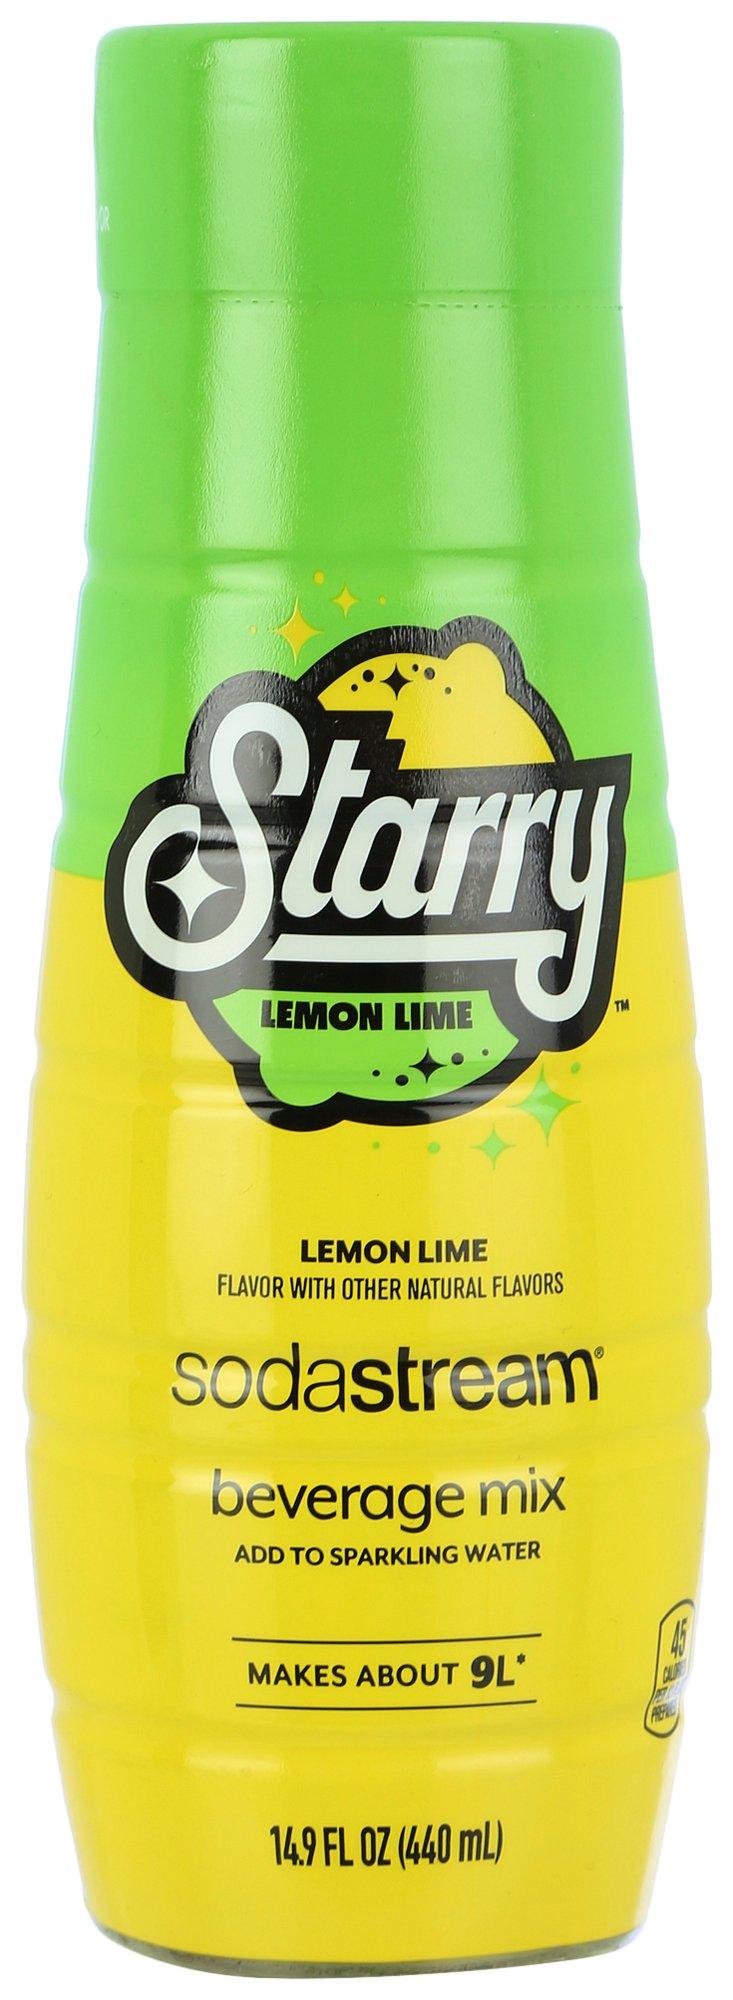 Starry Lemon Lime Mix